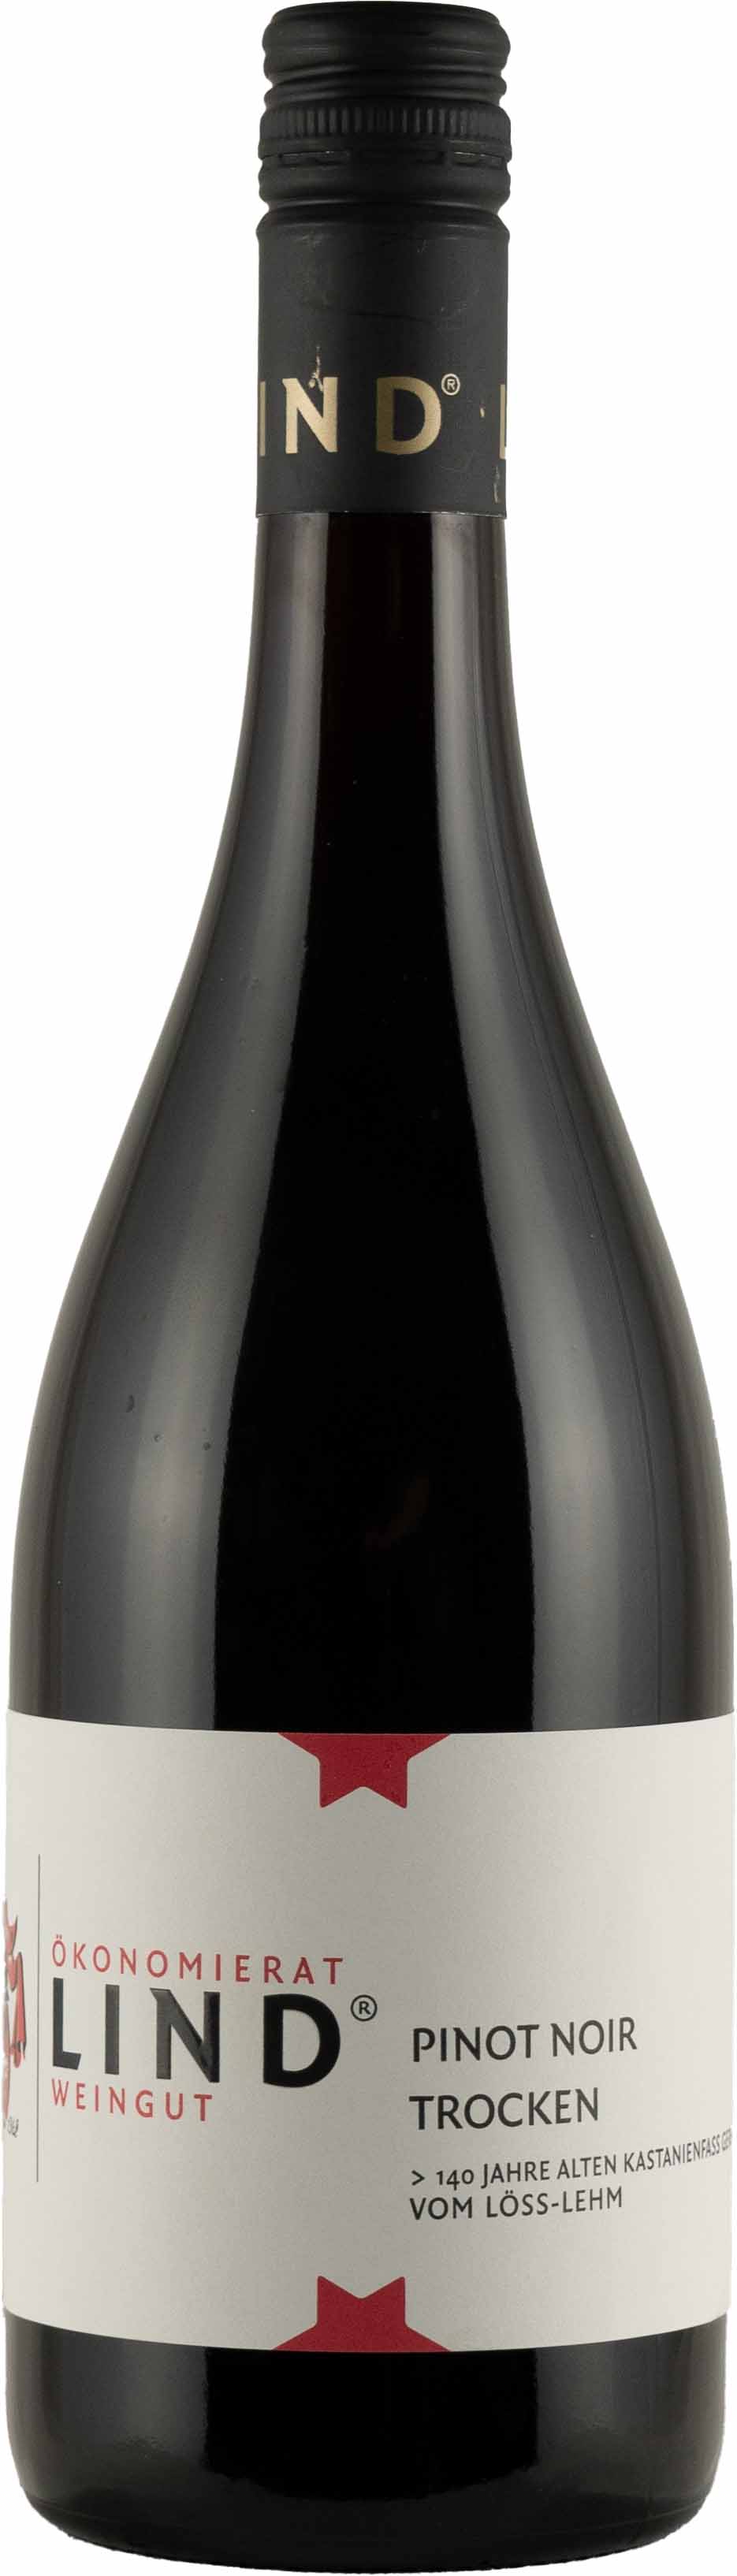 2021 Pinot Noir trocken Mandelpfad 0,75 L - Weingut Ökonomierat Lind